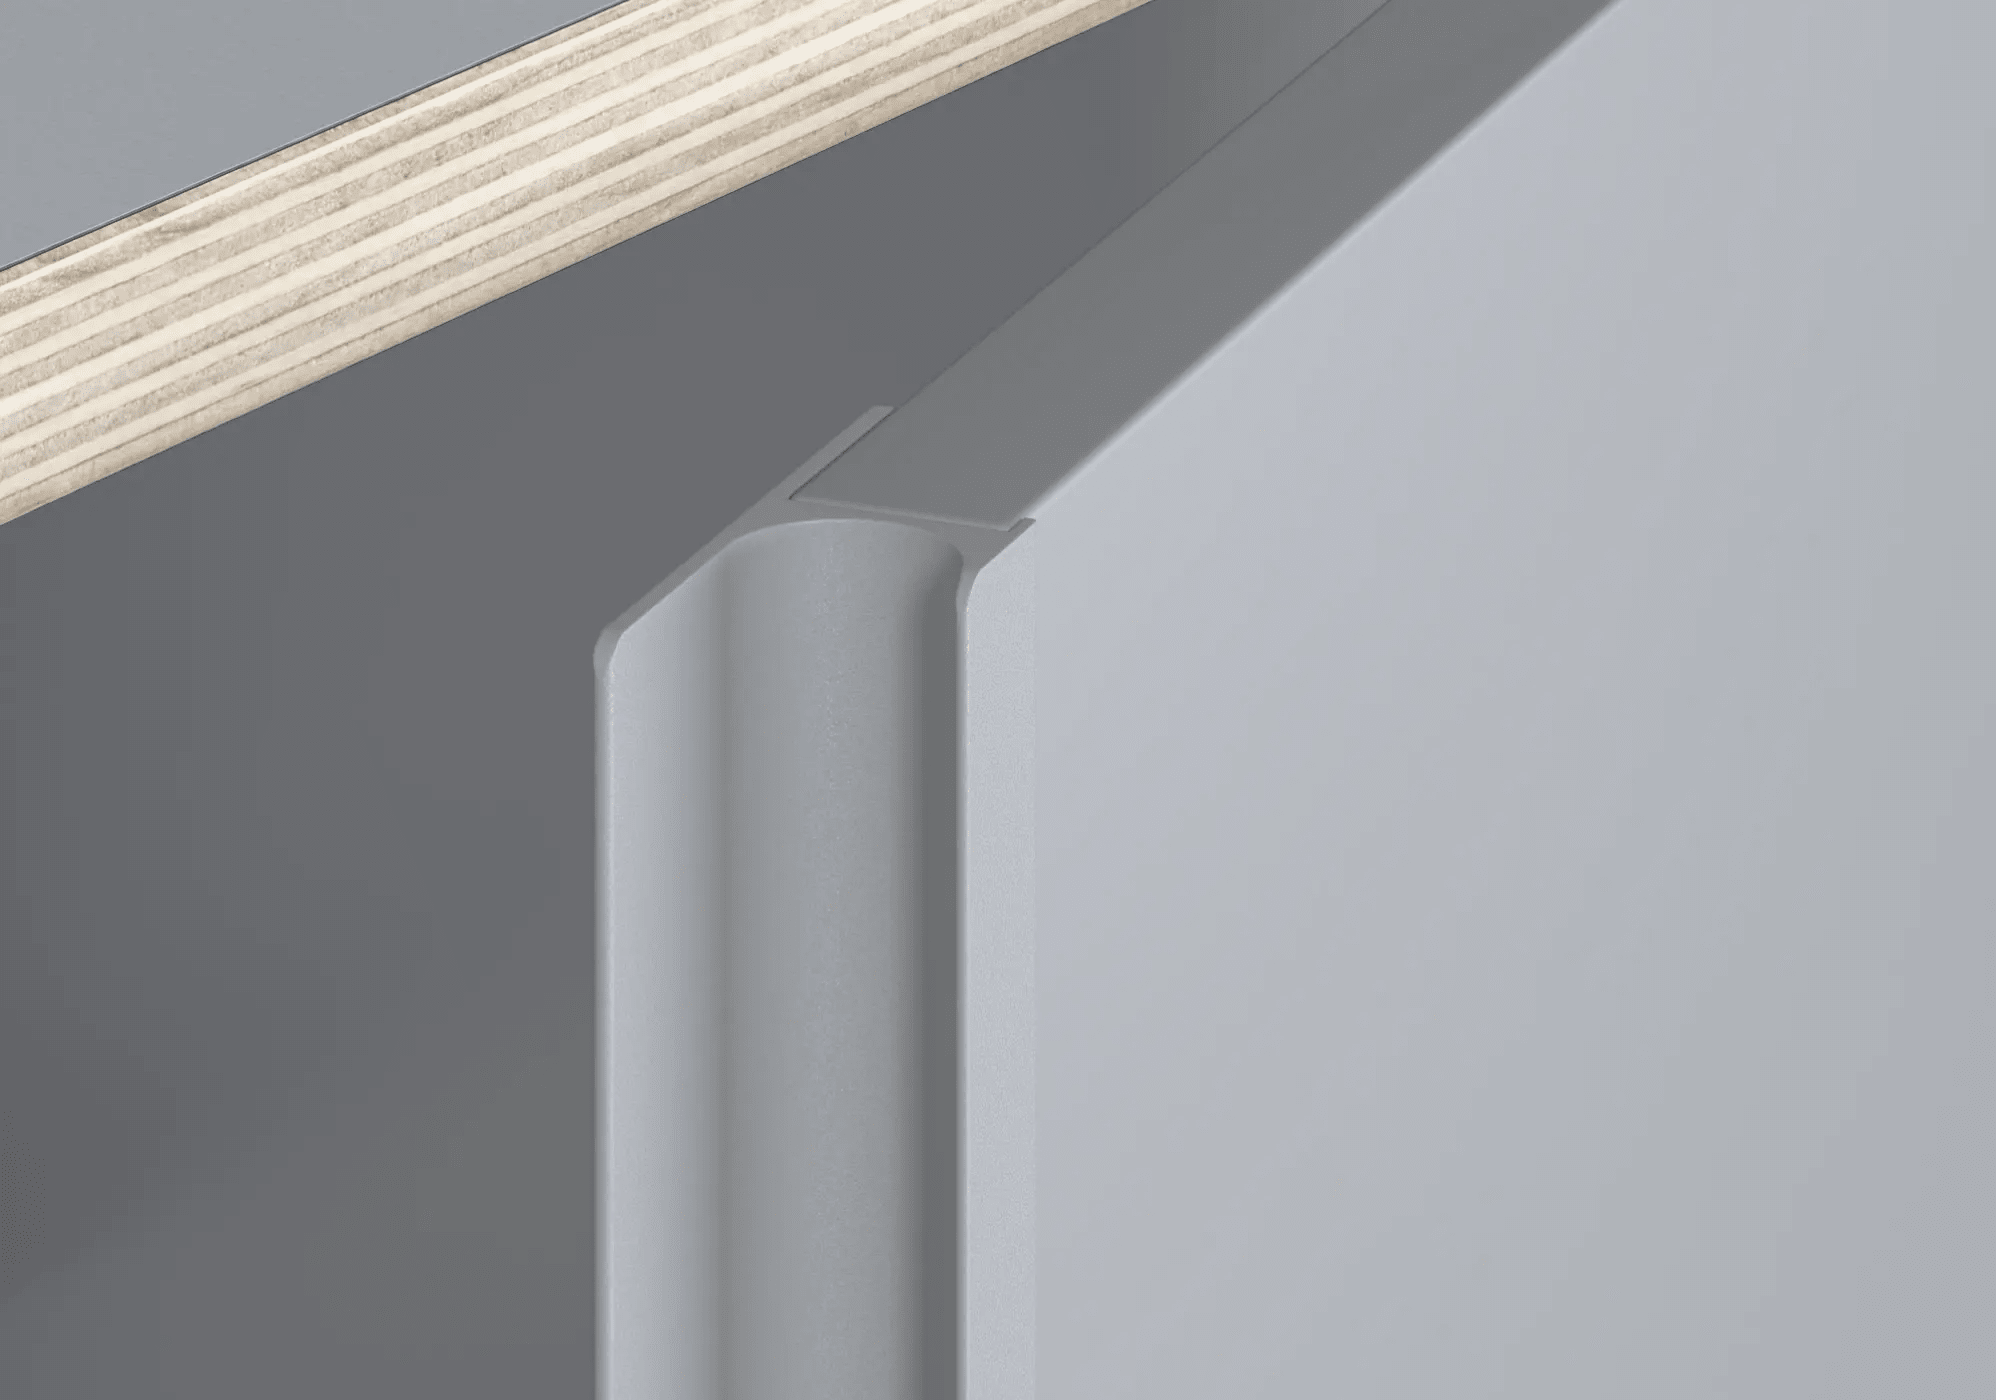 Tiefes Graue Multiplex-Platte Sideboard mit Türen, Schubladen, Ruckwanden und Sockel multiplexplatten - 191x73x40cm 7